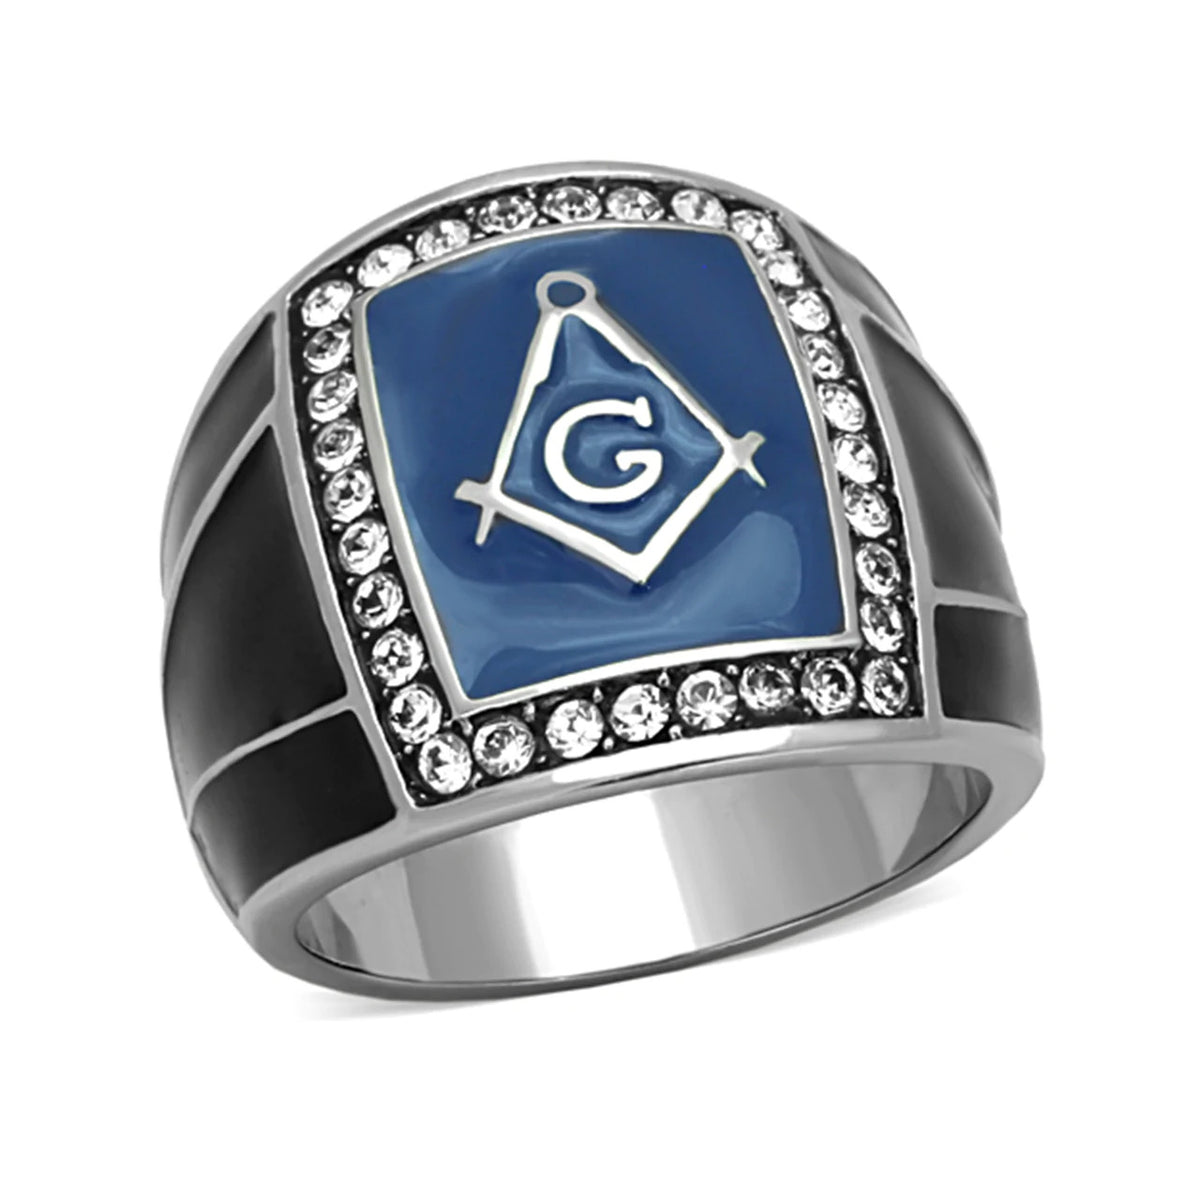 CJG2175 Stainless Steel Top Grade Crystal Ring